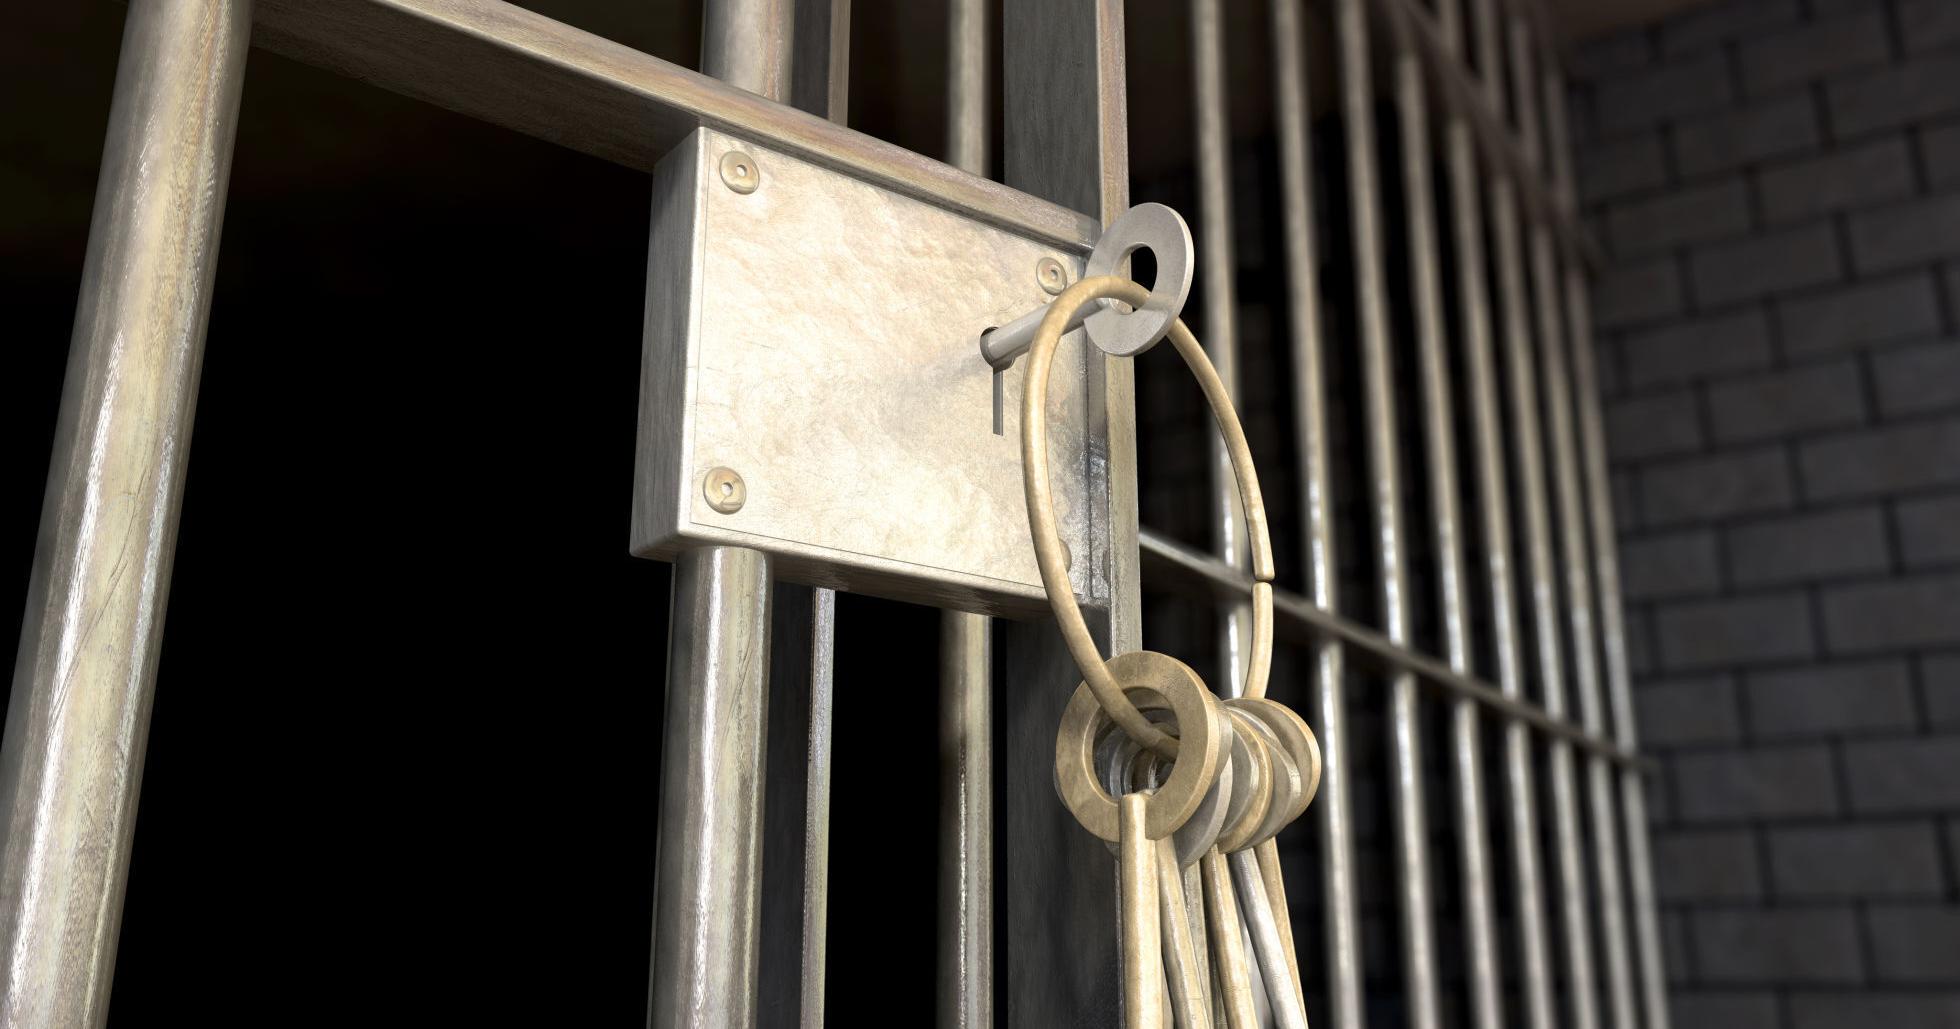 Man arrested at Missoula motel on sex trafficking charge